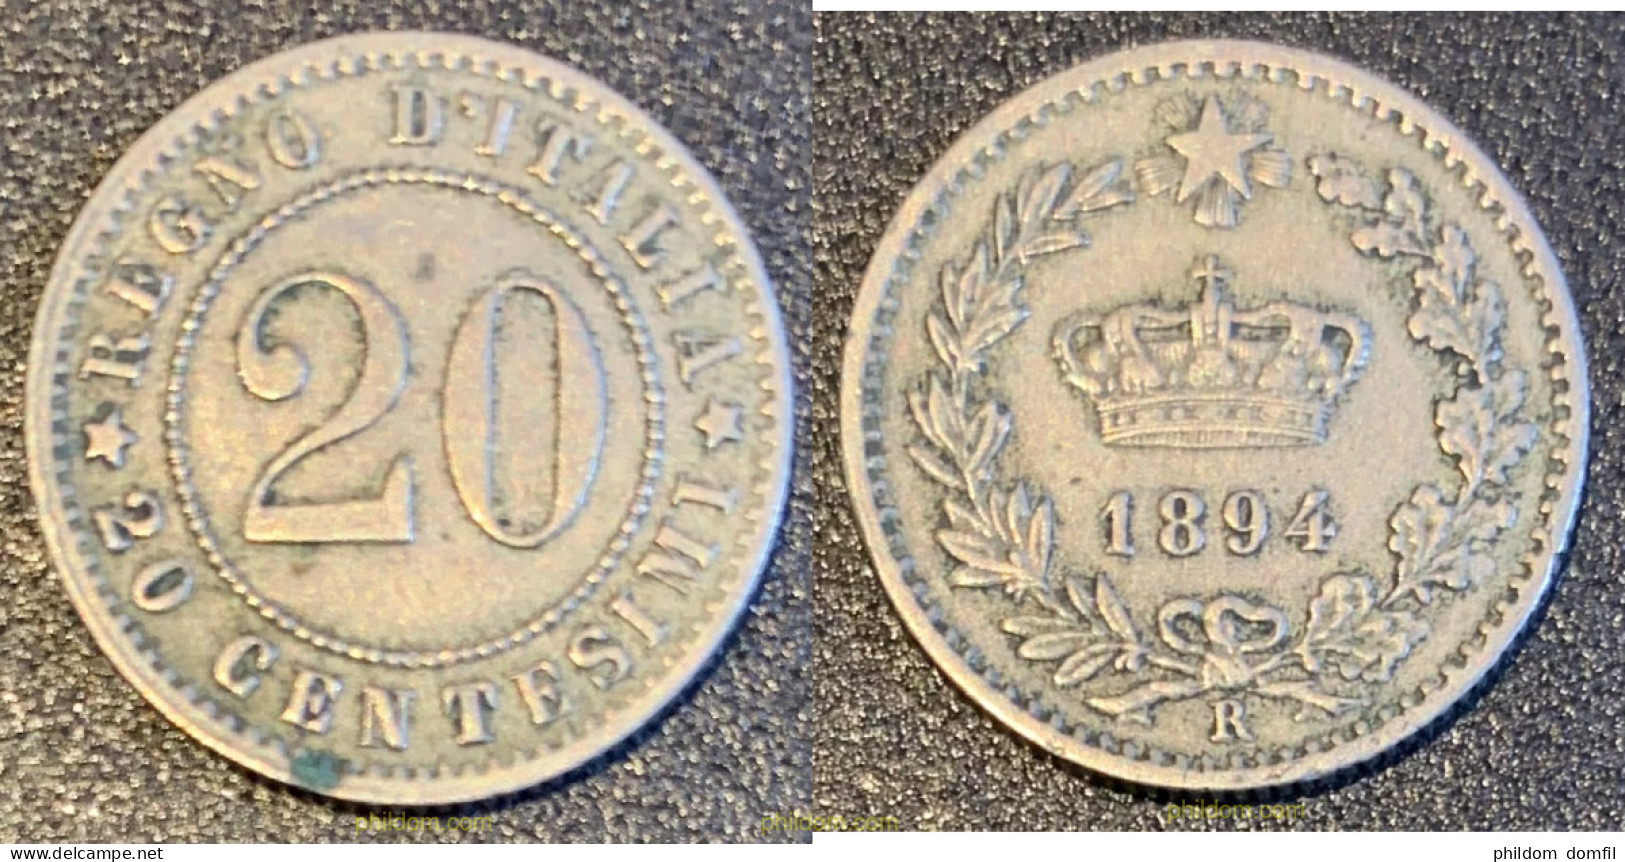 2236 ITALIA 1894 20 CENTESIMI 1894 ITALI ITALY SILVER - To Identify